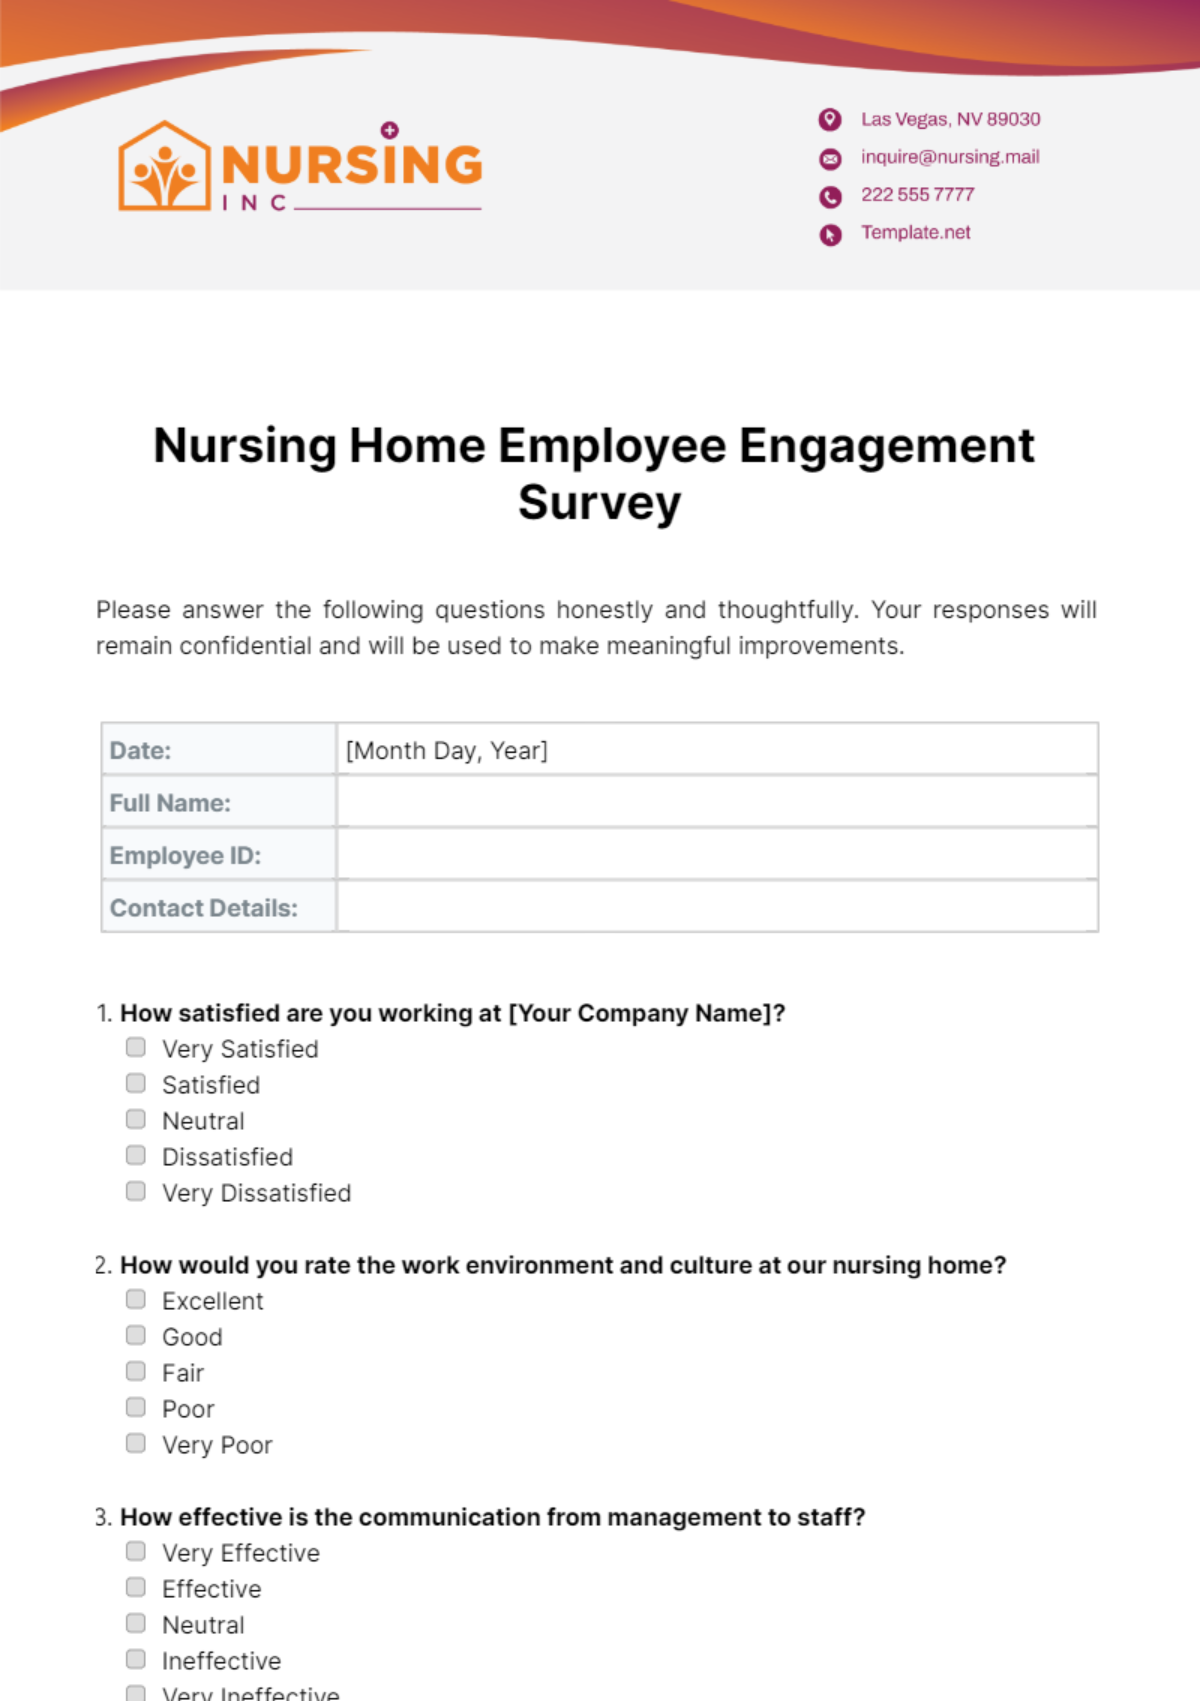 Nursing Home Employee Engagement Survey Template